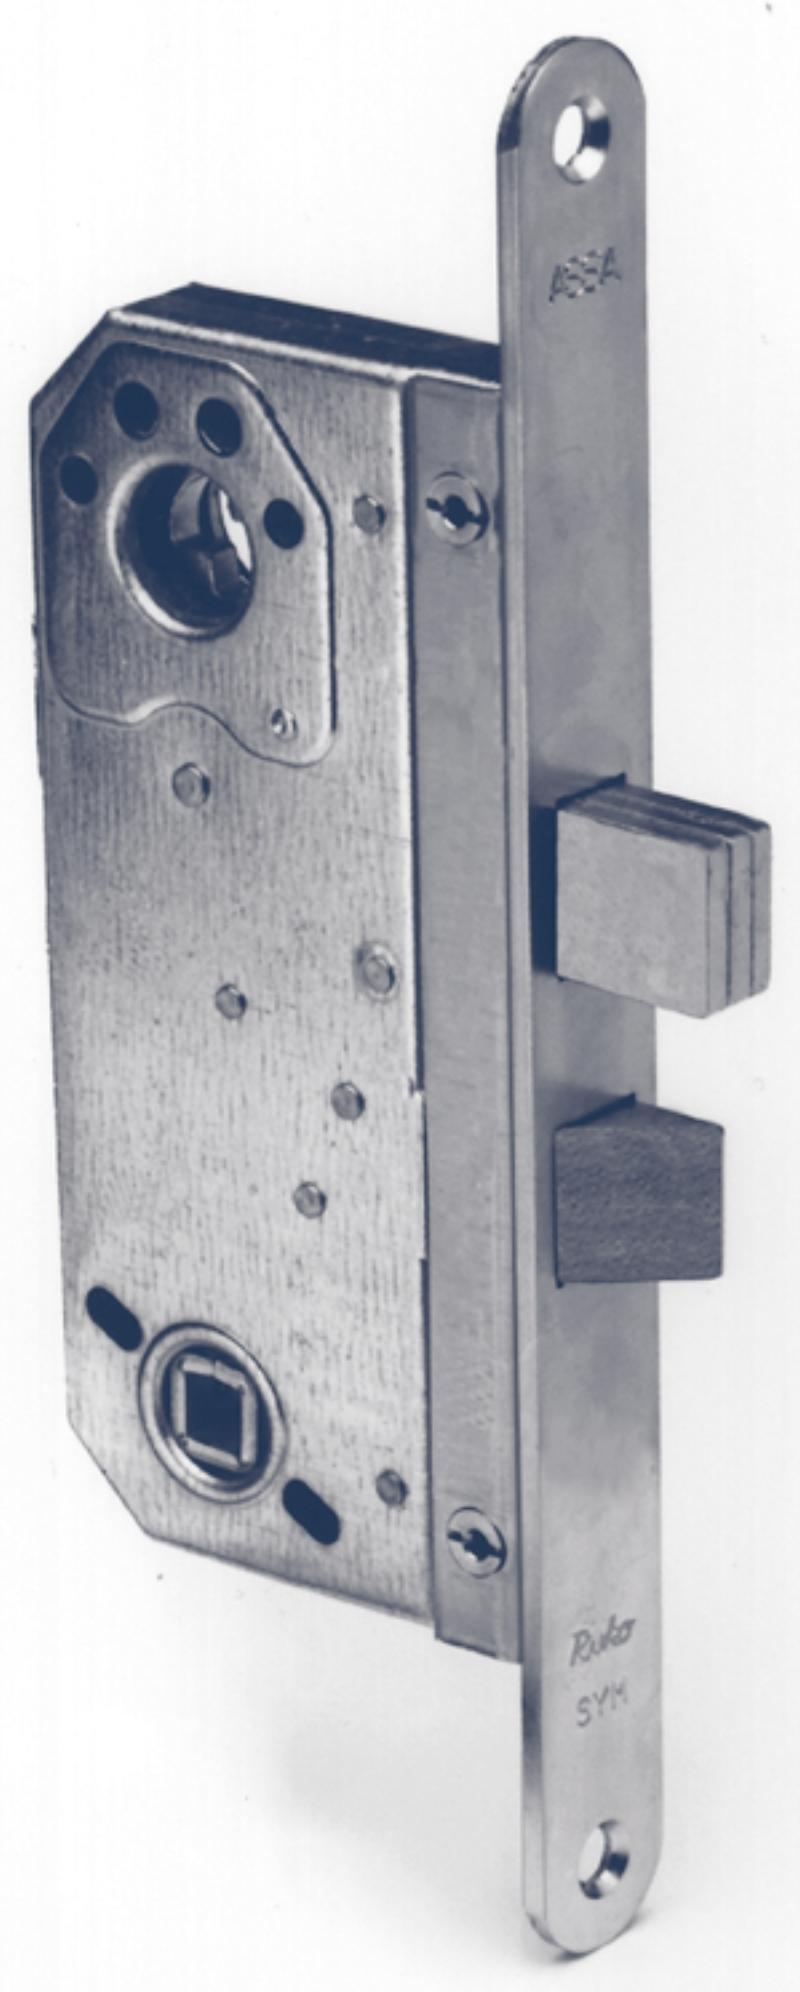 Assa lock case 565/70 Reversible